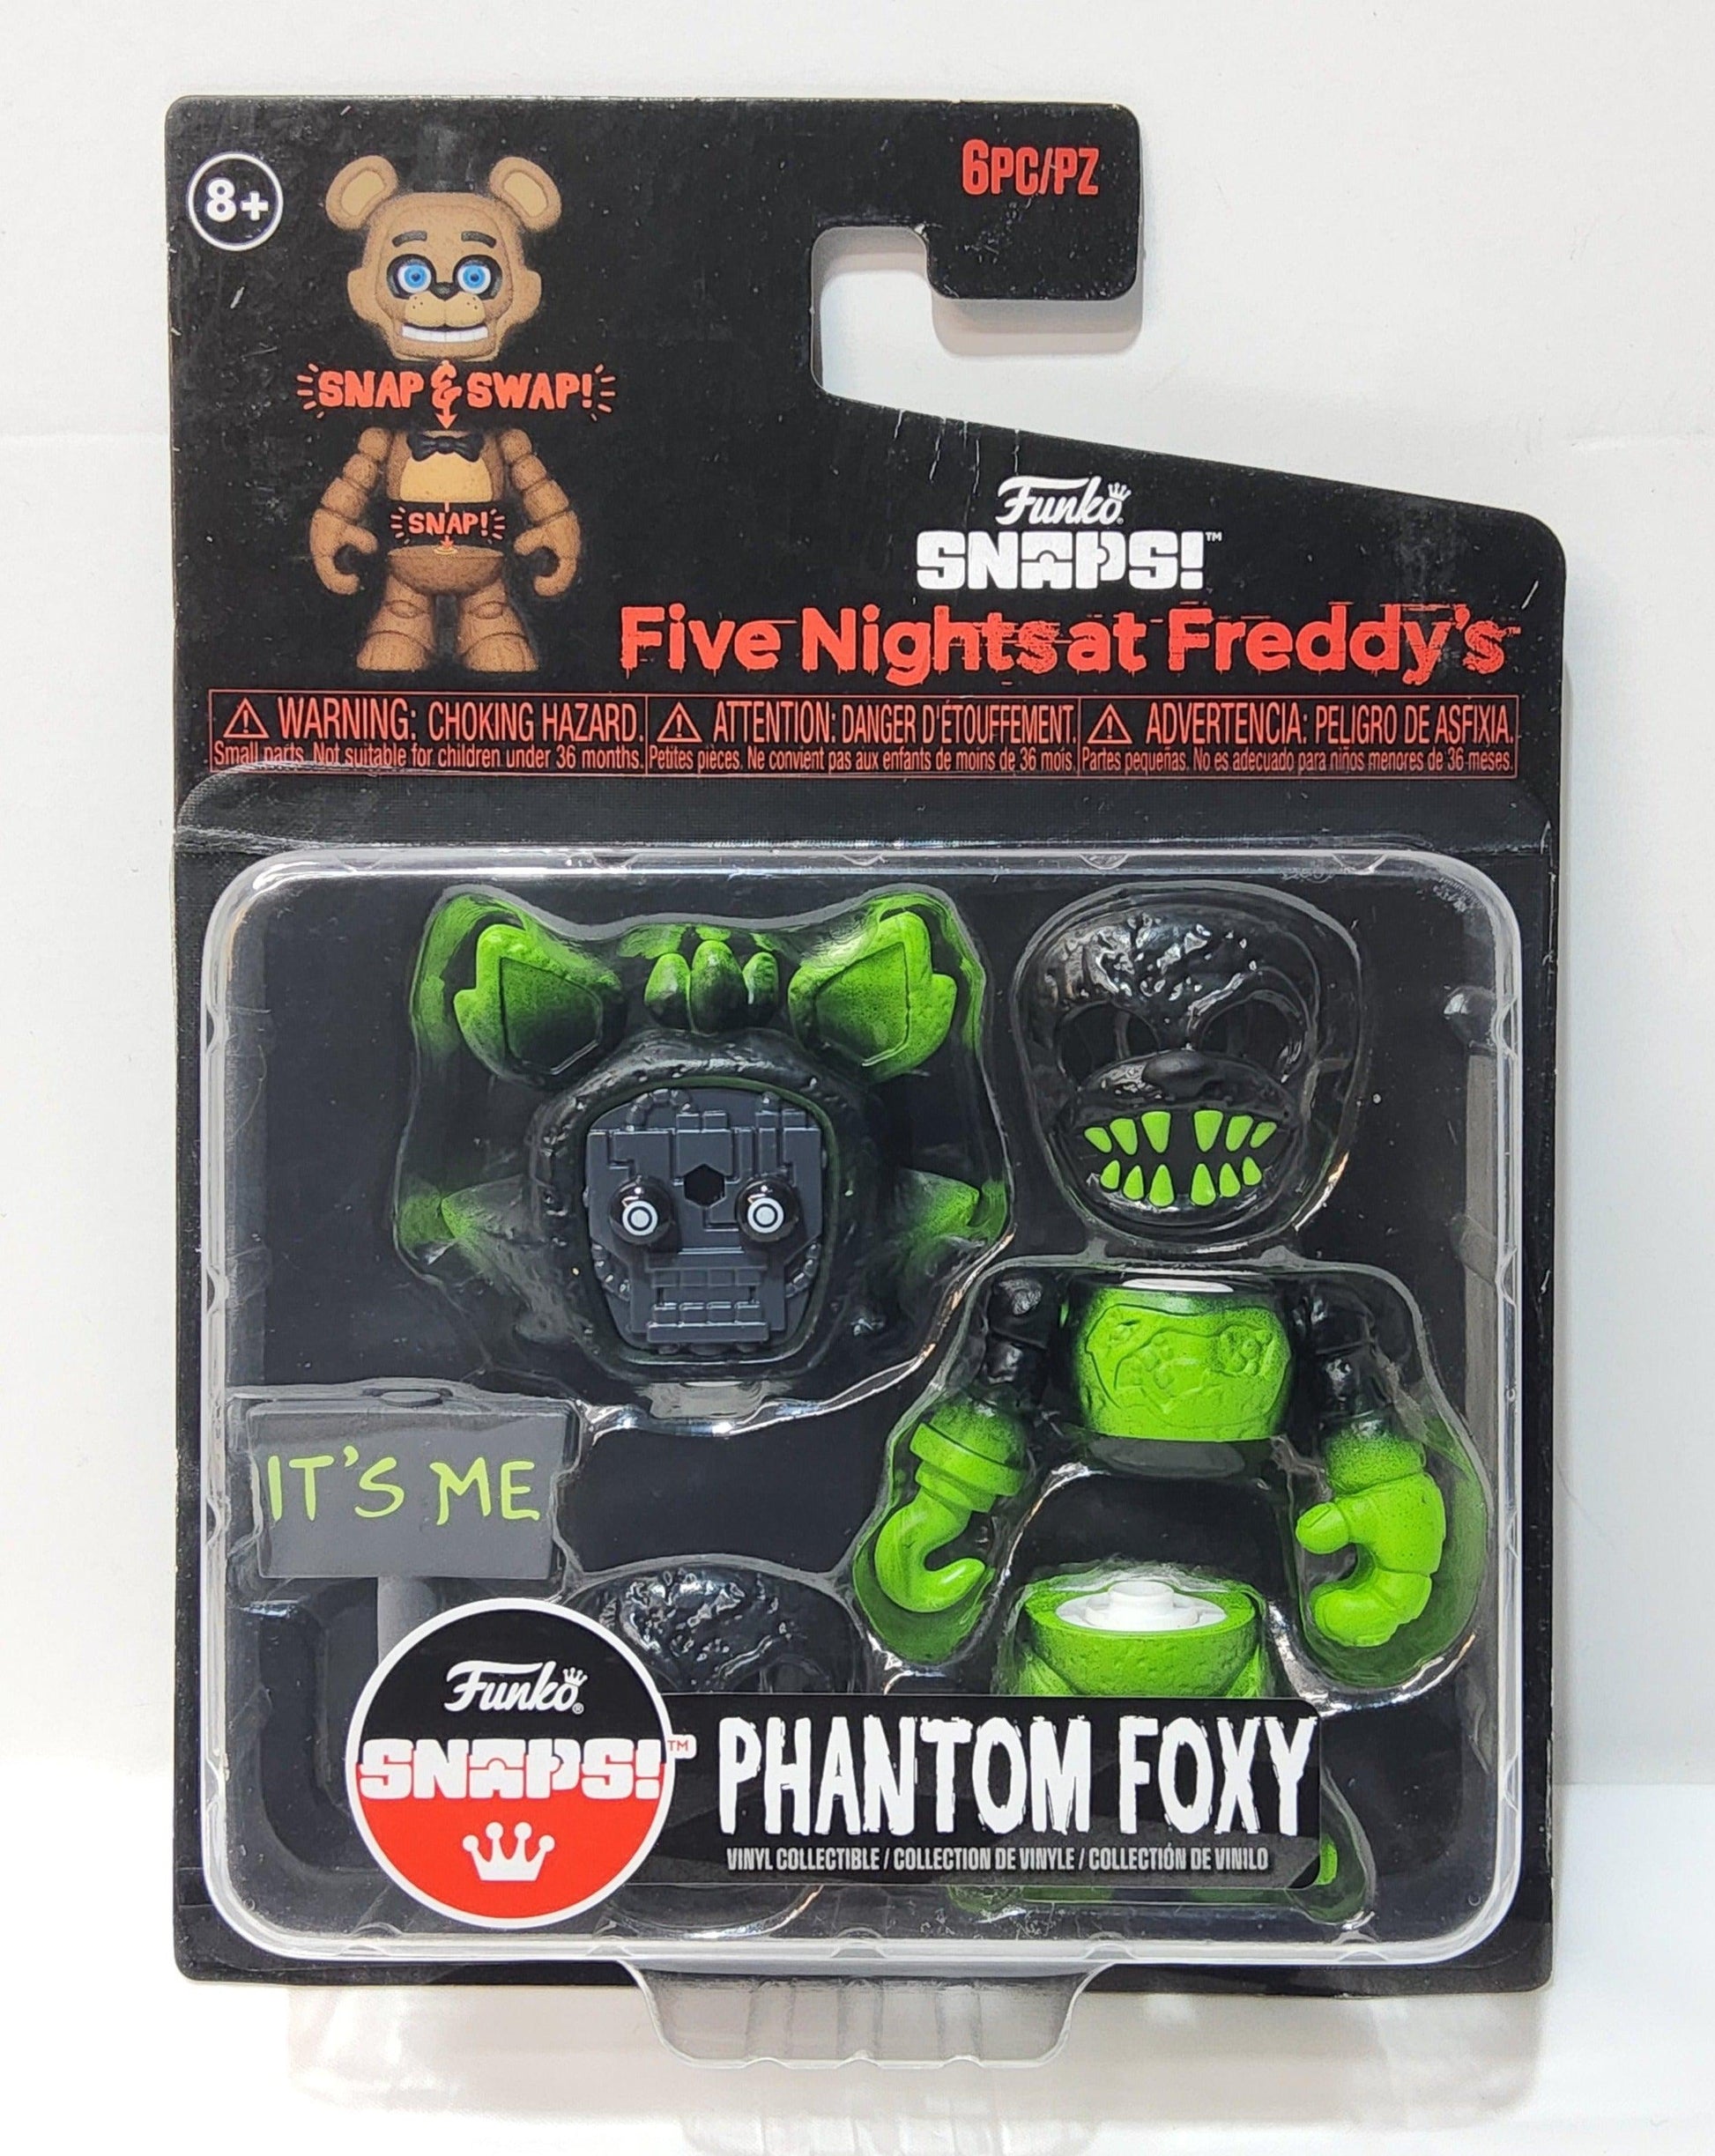 Funko Pop Five Nights at Freddy's Phantom Foxy FNAF Funko Snaps Action Figure - Logan's Toy Chest